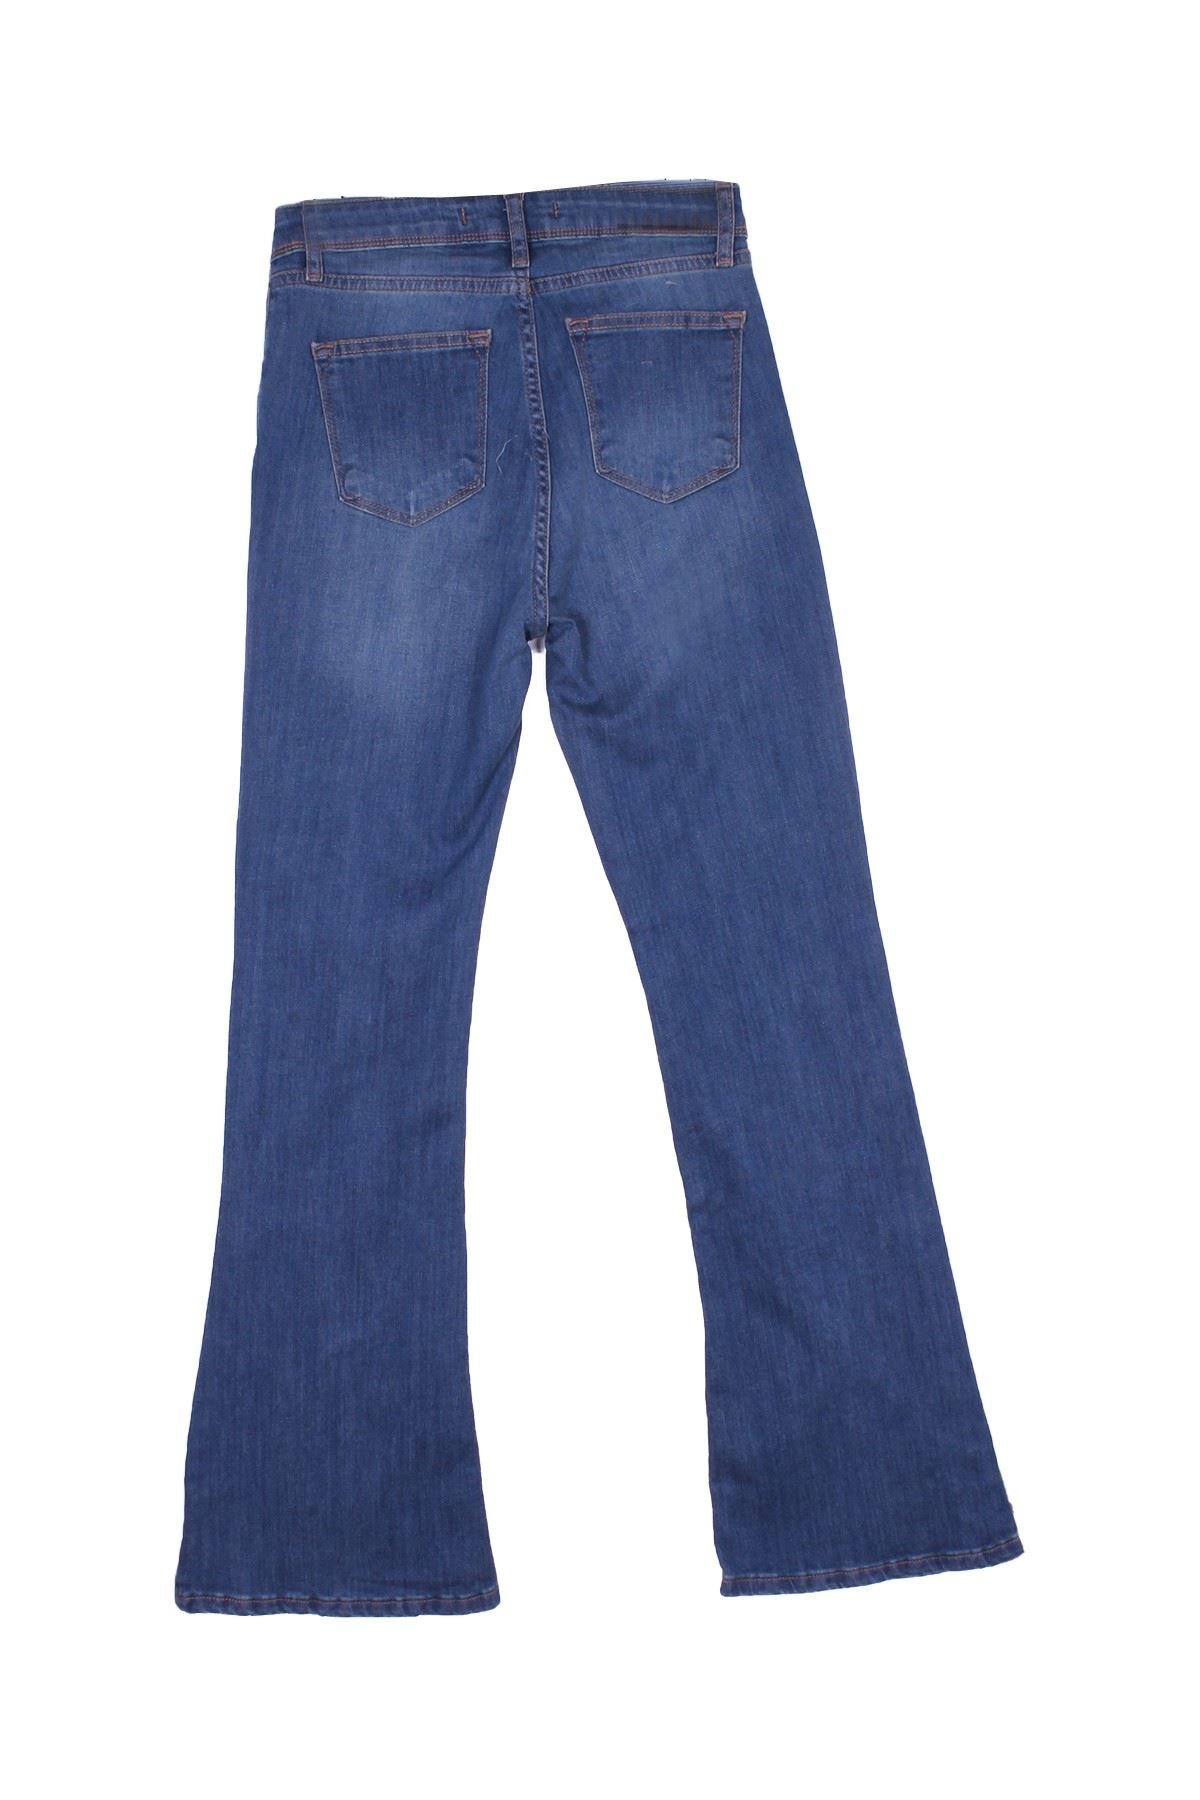 Giyinsen Kadın Mavi Jean Pantolon - 23KD52000007